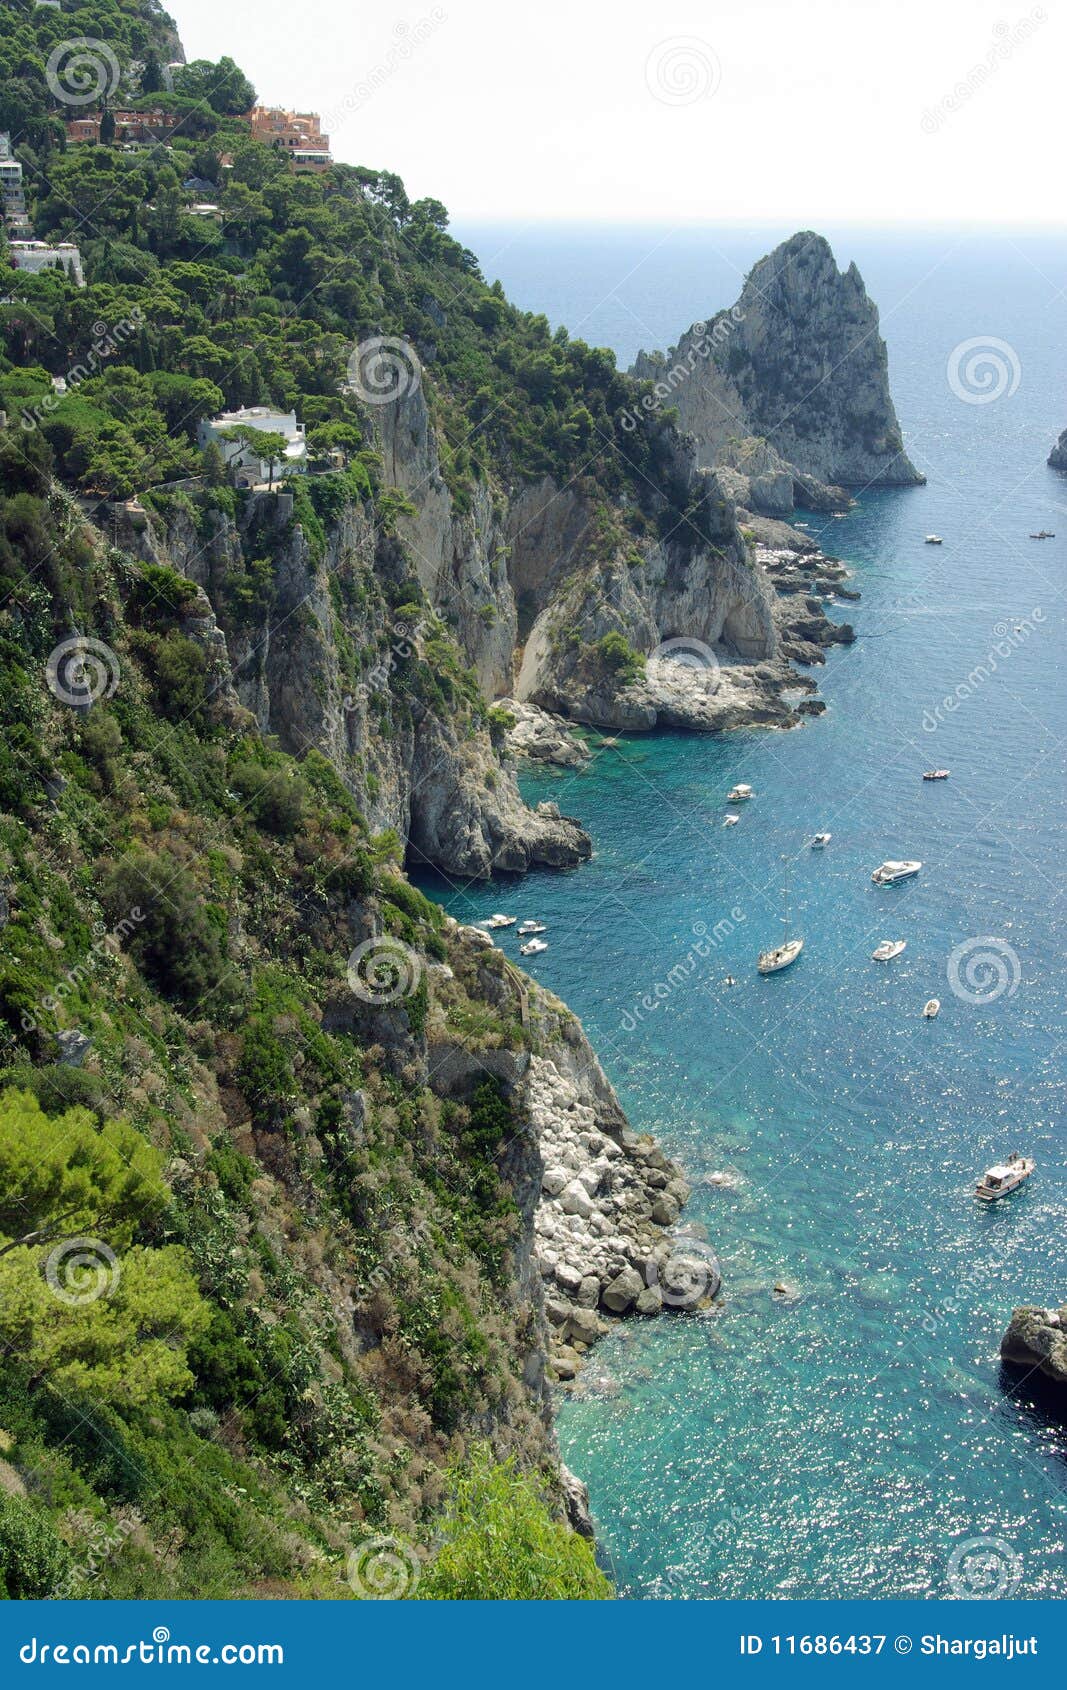 gulf of salerno - capri island, italy